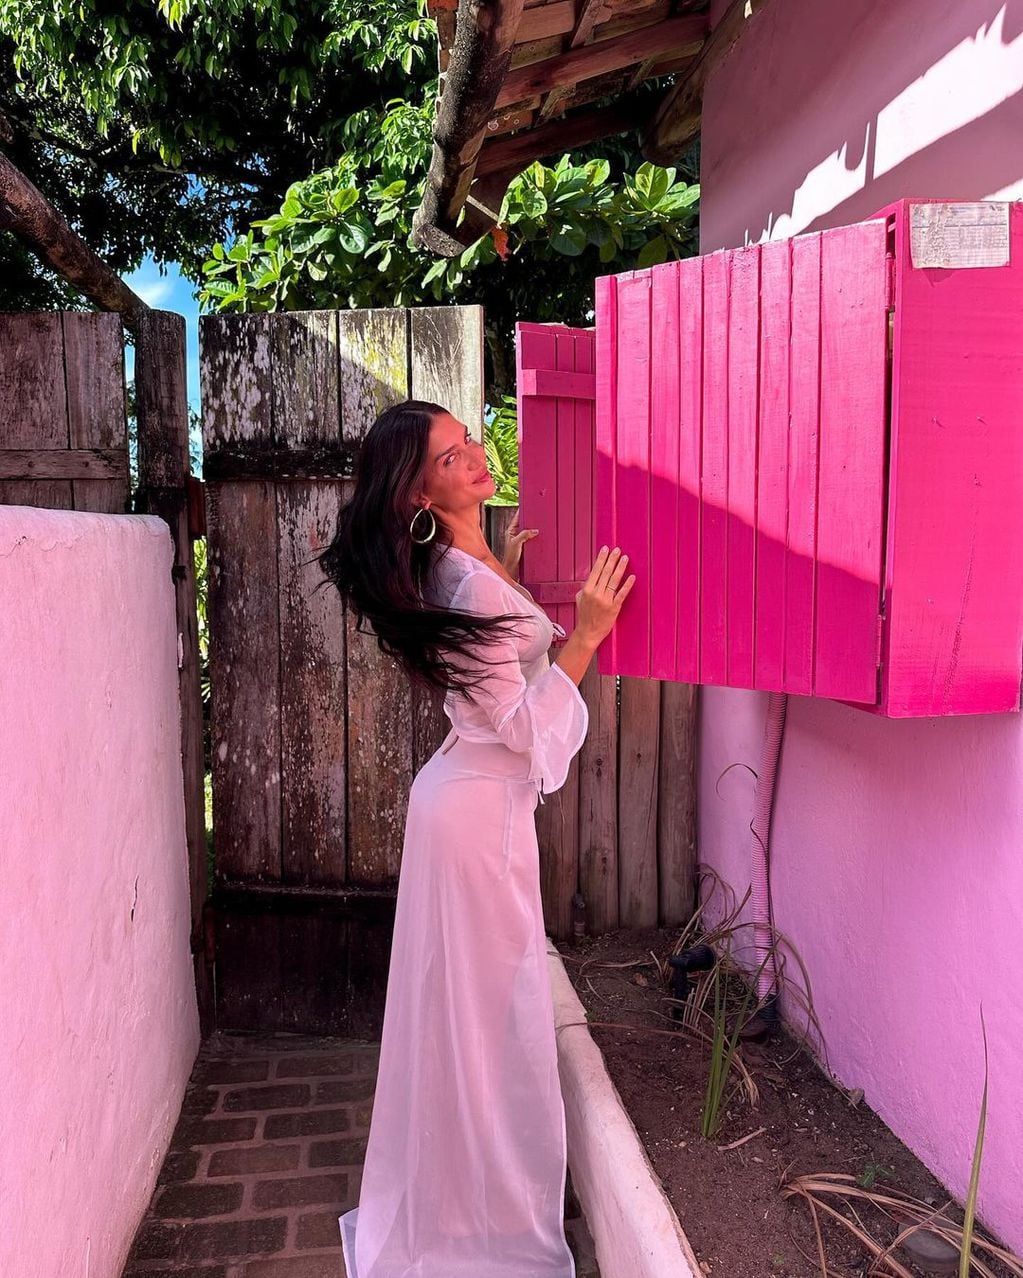 Zaira Nara paralizó Instagram con un outfit total white y transparencias